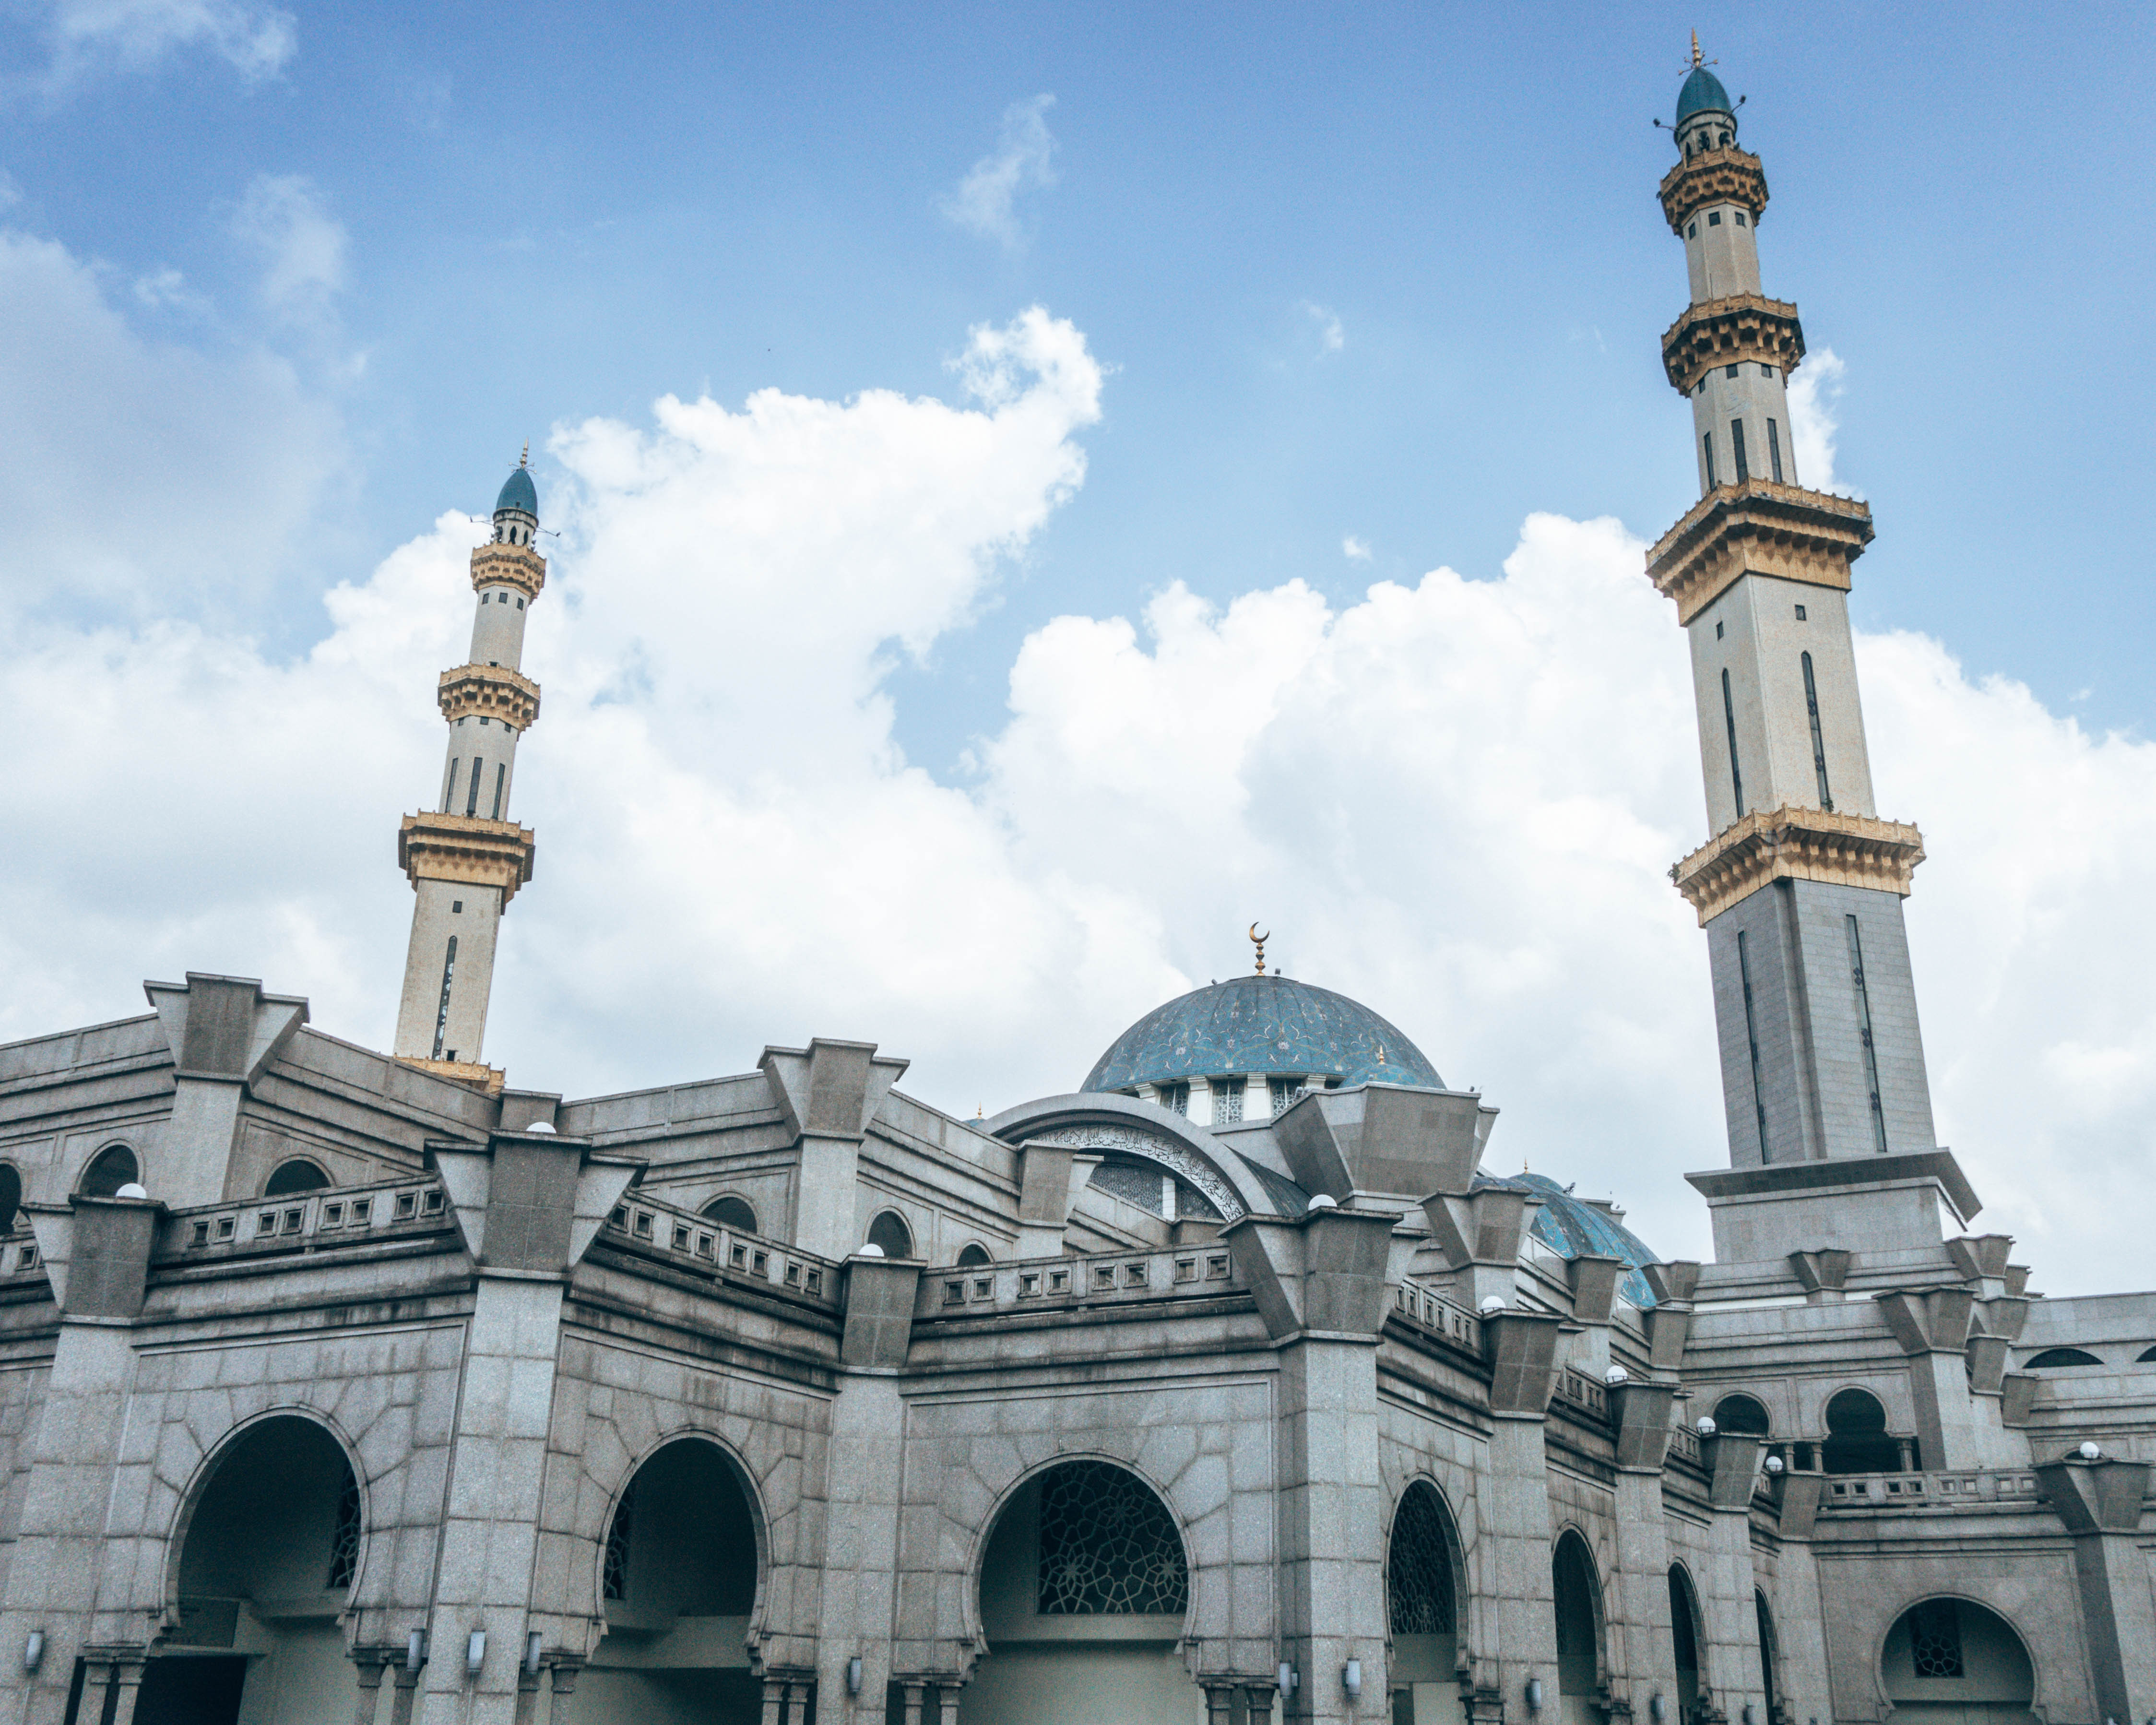 Masjid Wilayah Persekutuan things to do in Kuala Lumpur - wediditourway.com